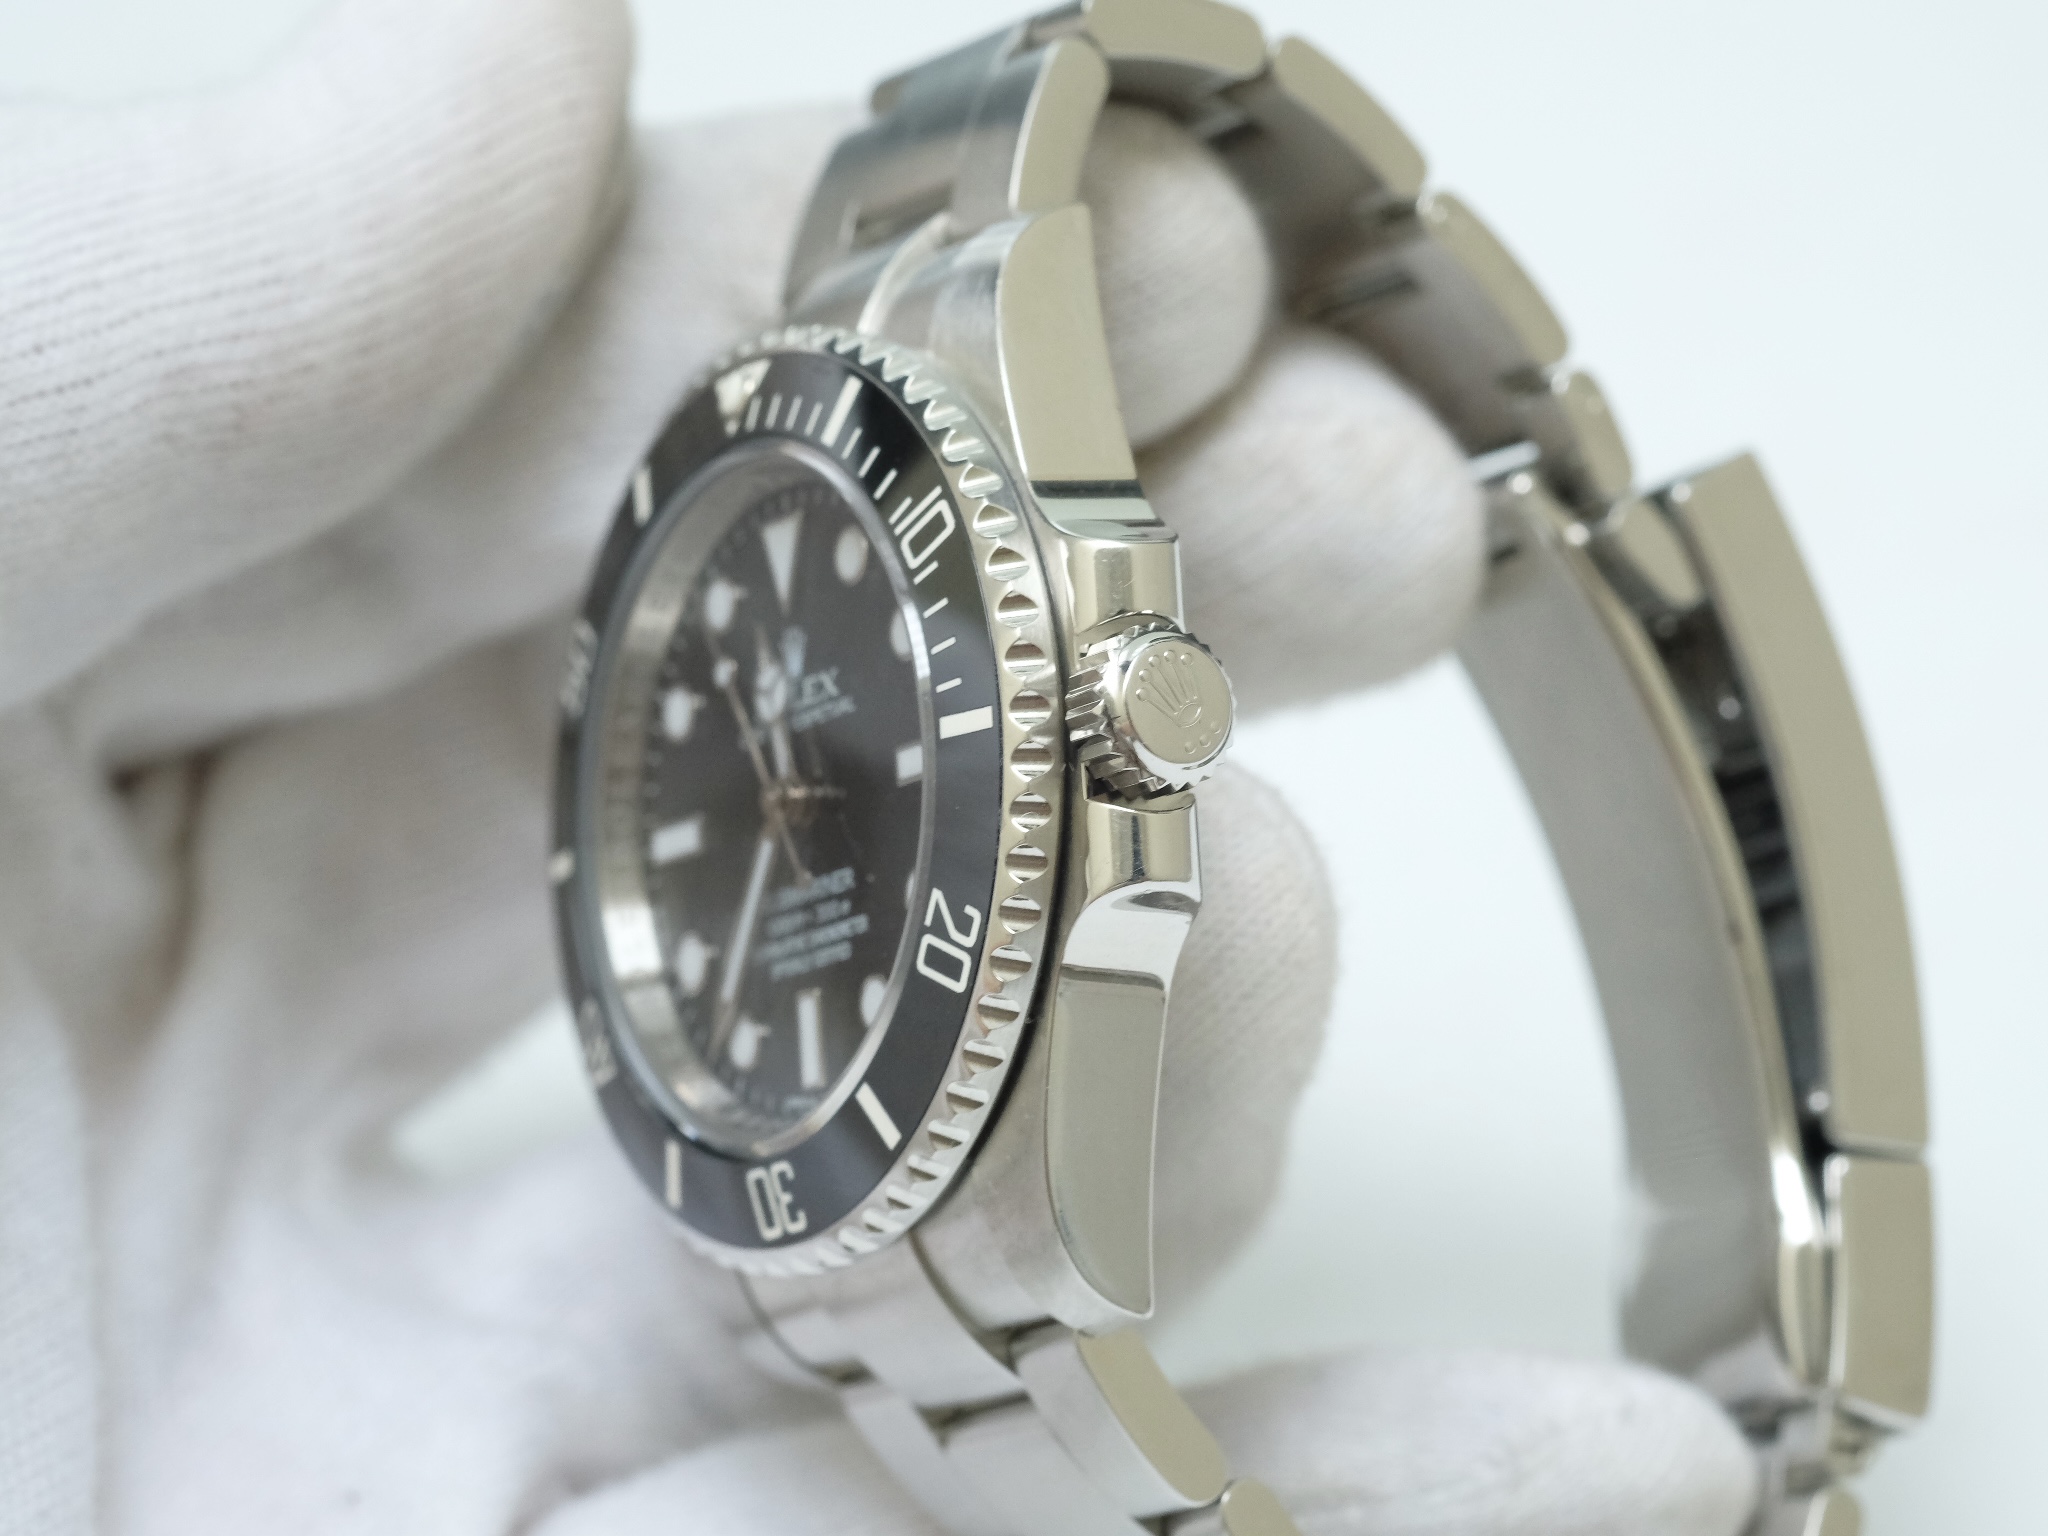 Đồng hồ Rolex Submariner 114060